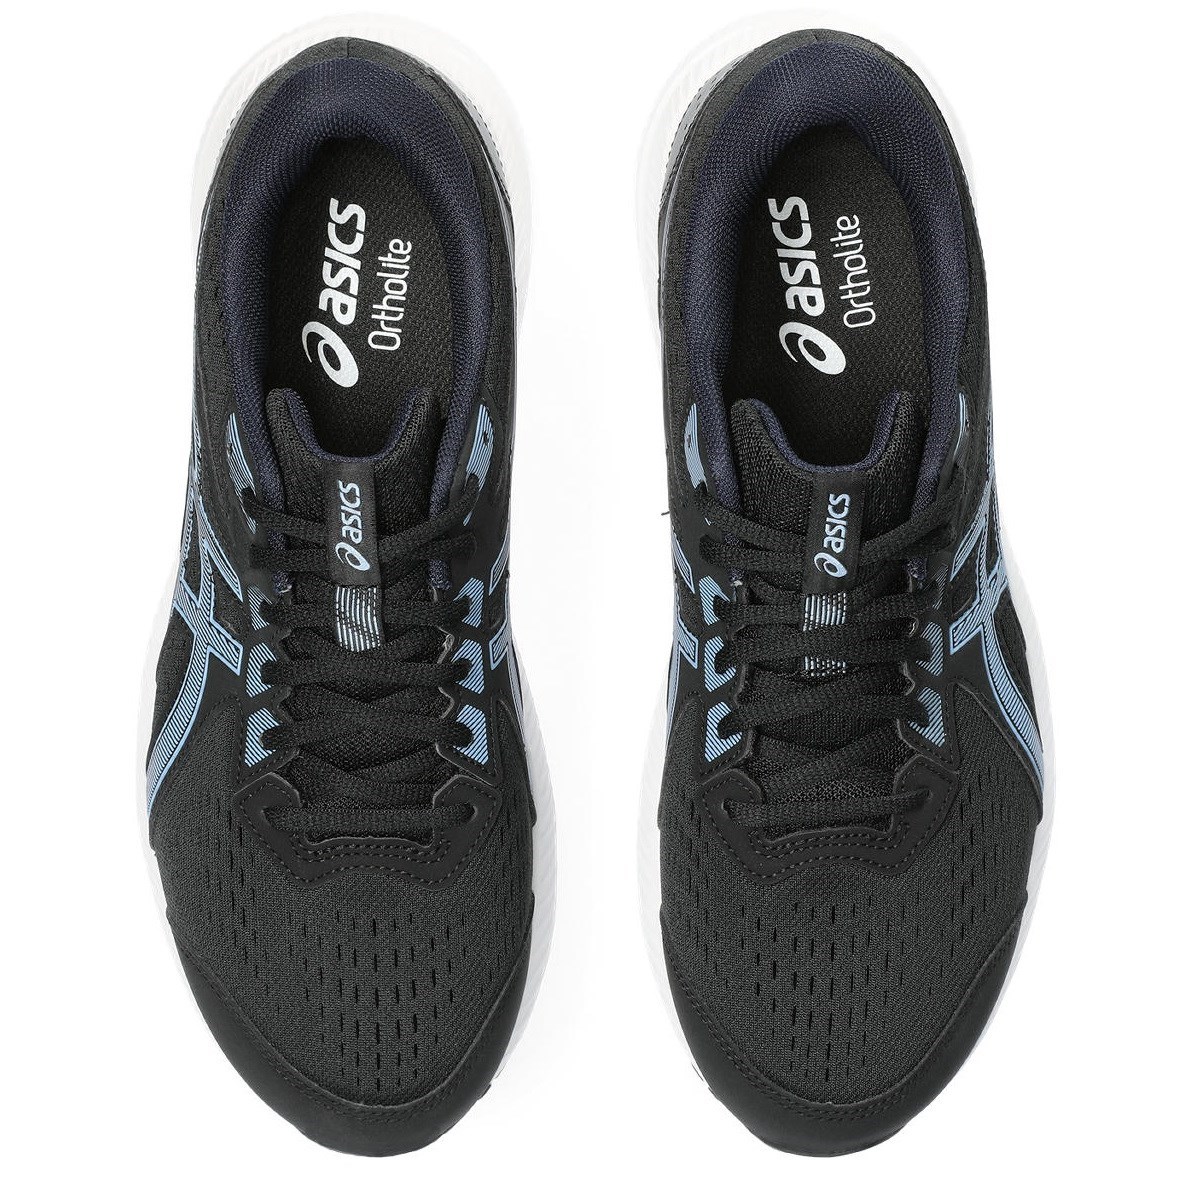 Asics Gel Contend 8 - Mens Running Shoes - Black/Blue Bliss | Sportitude